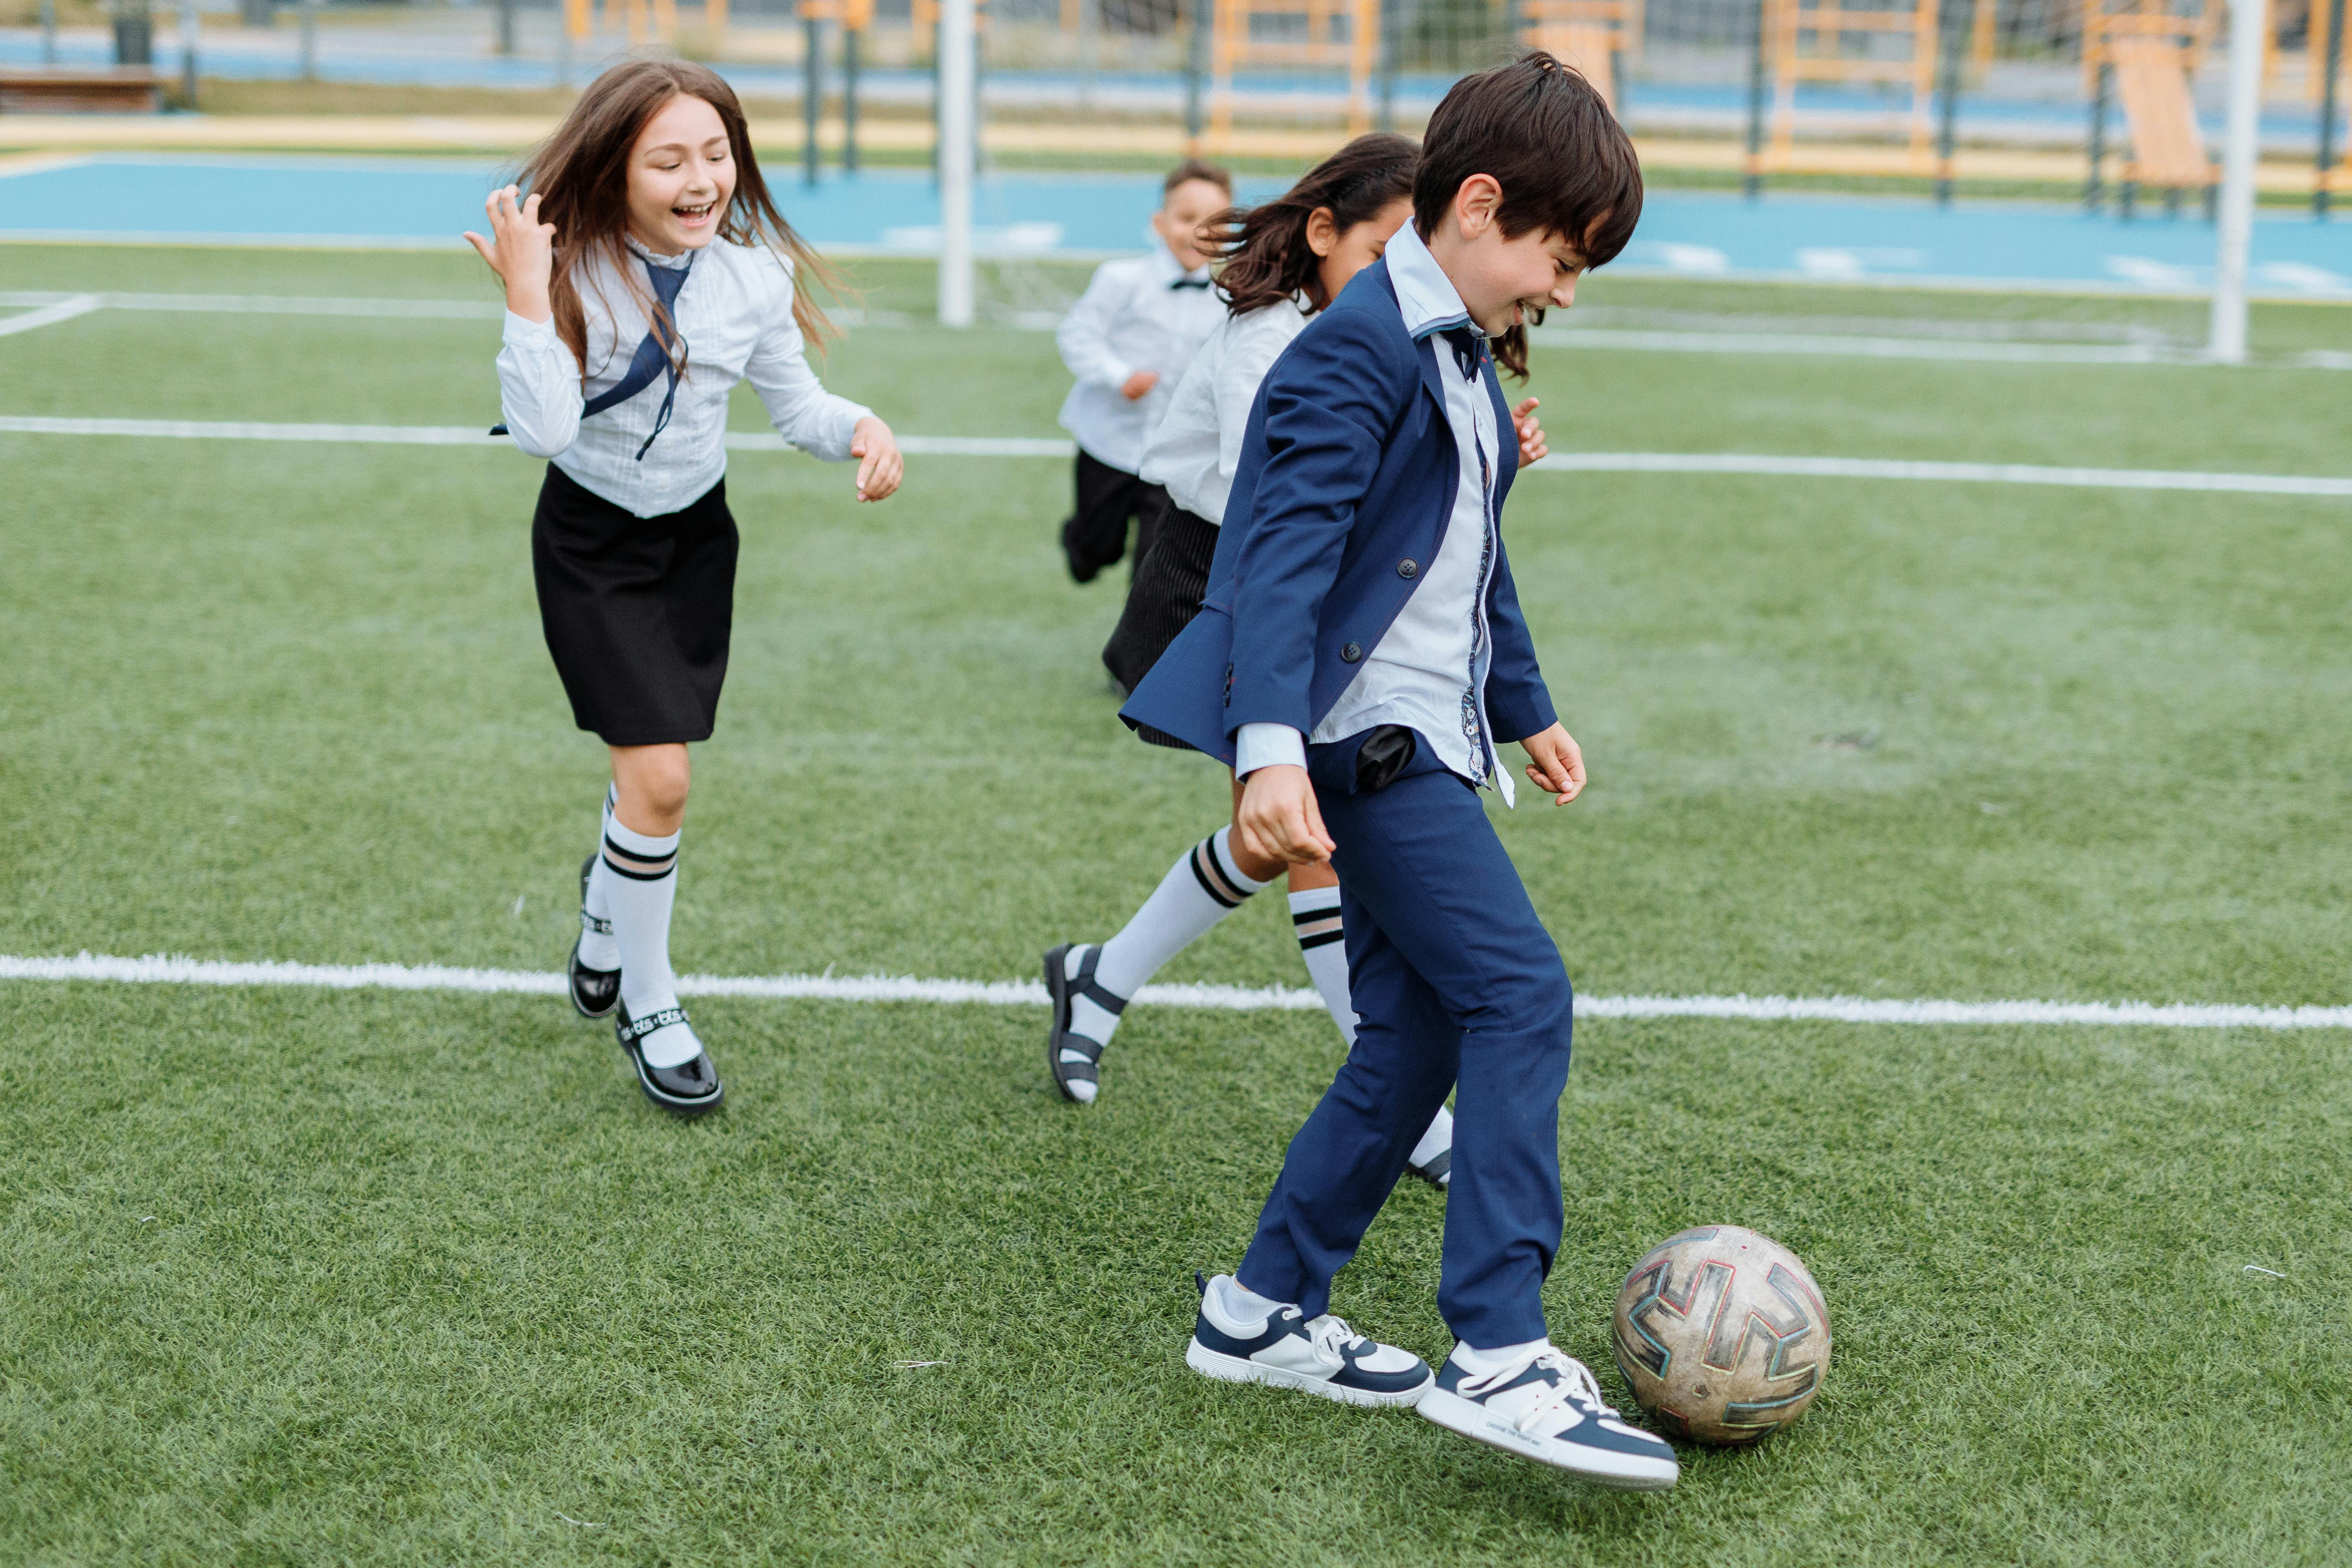 children having fun playing soccer